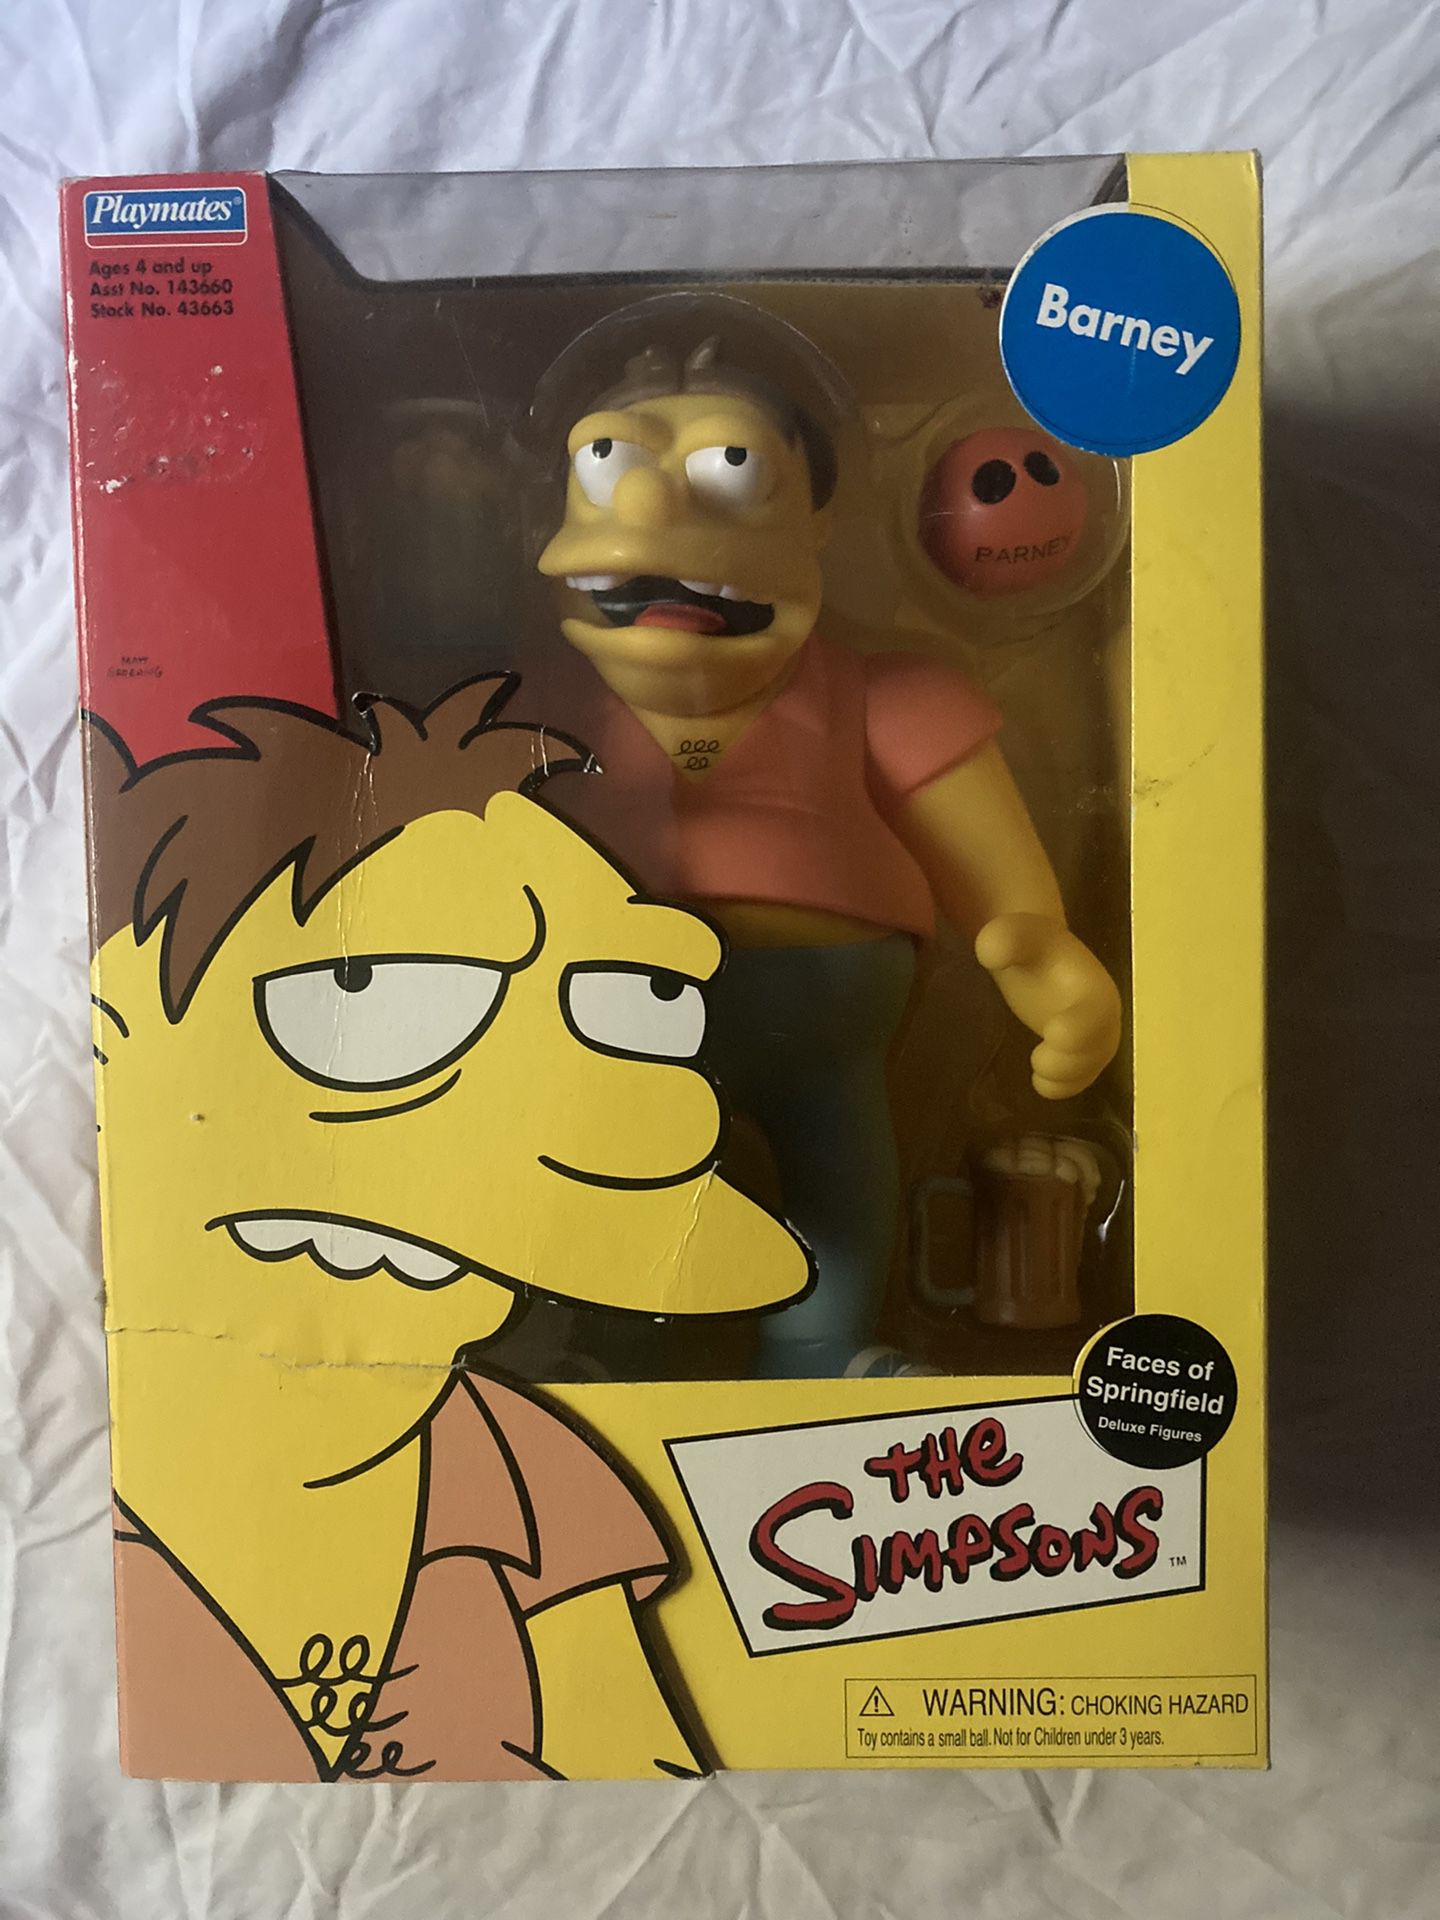 Playmates Simpsons 8inch Barney